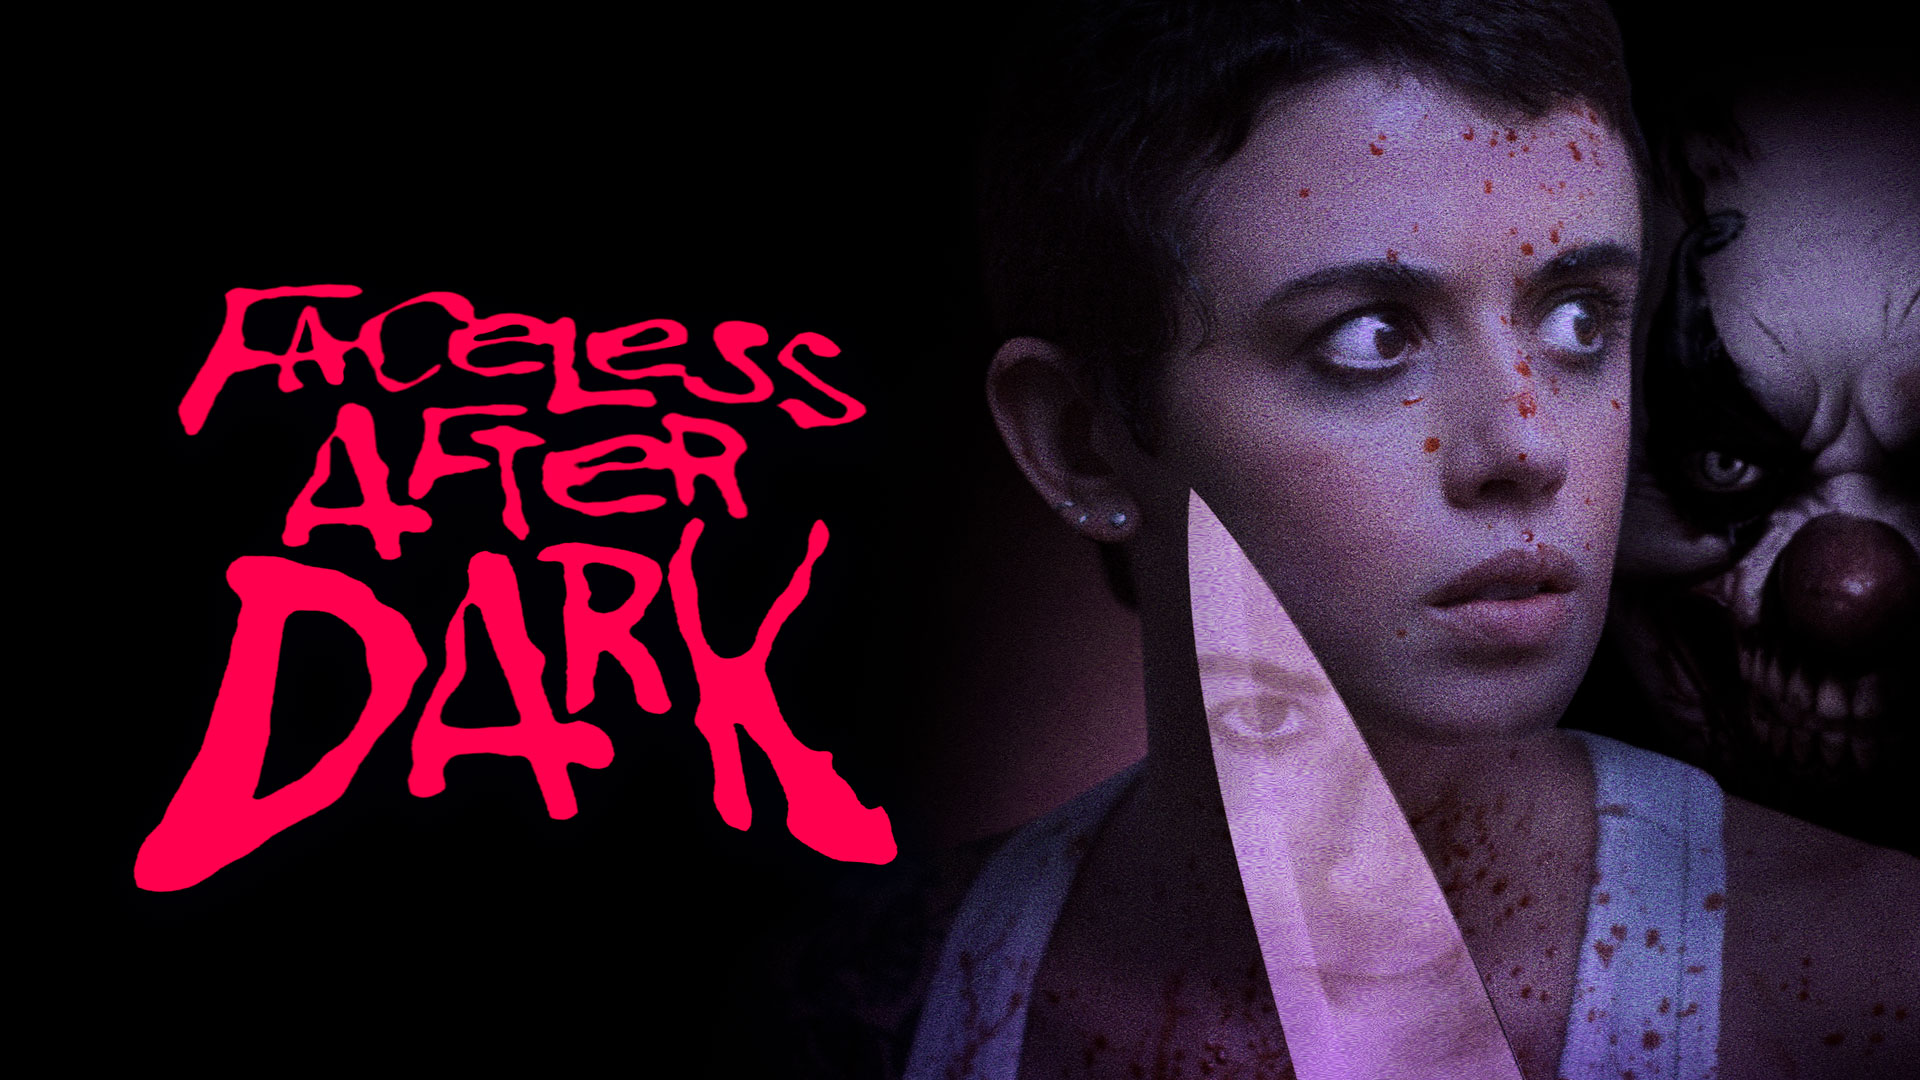 Faceless After Dark Review